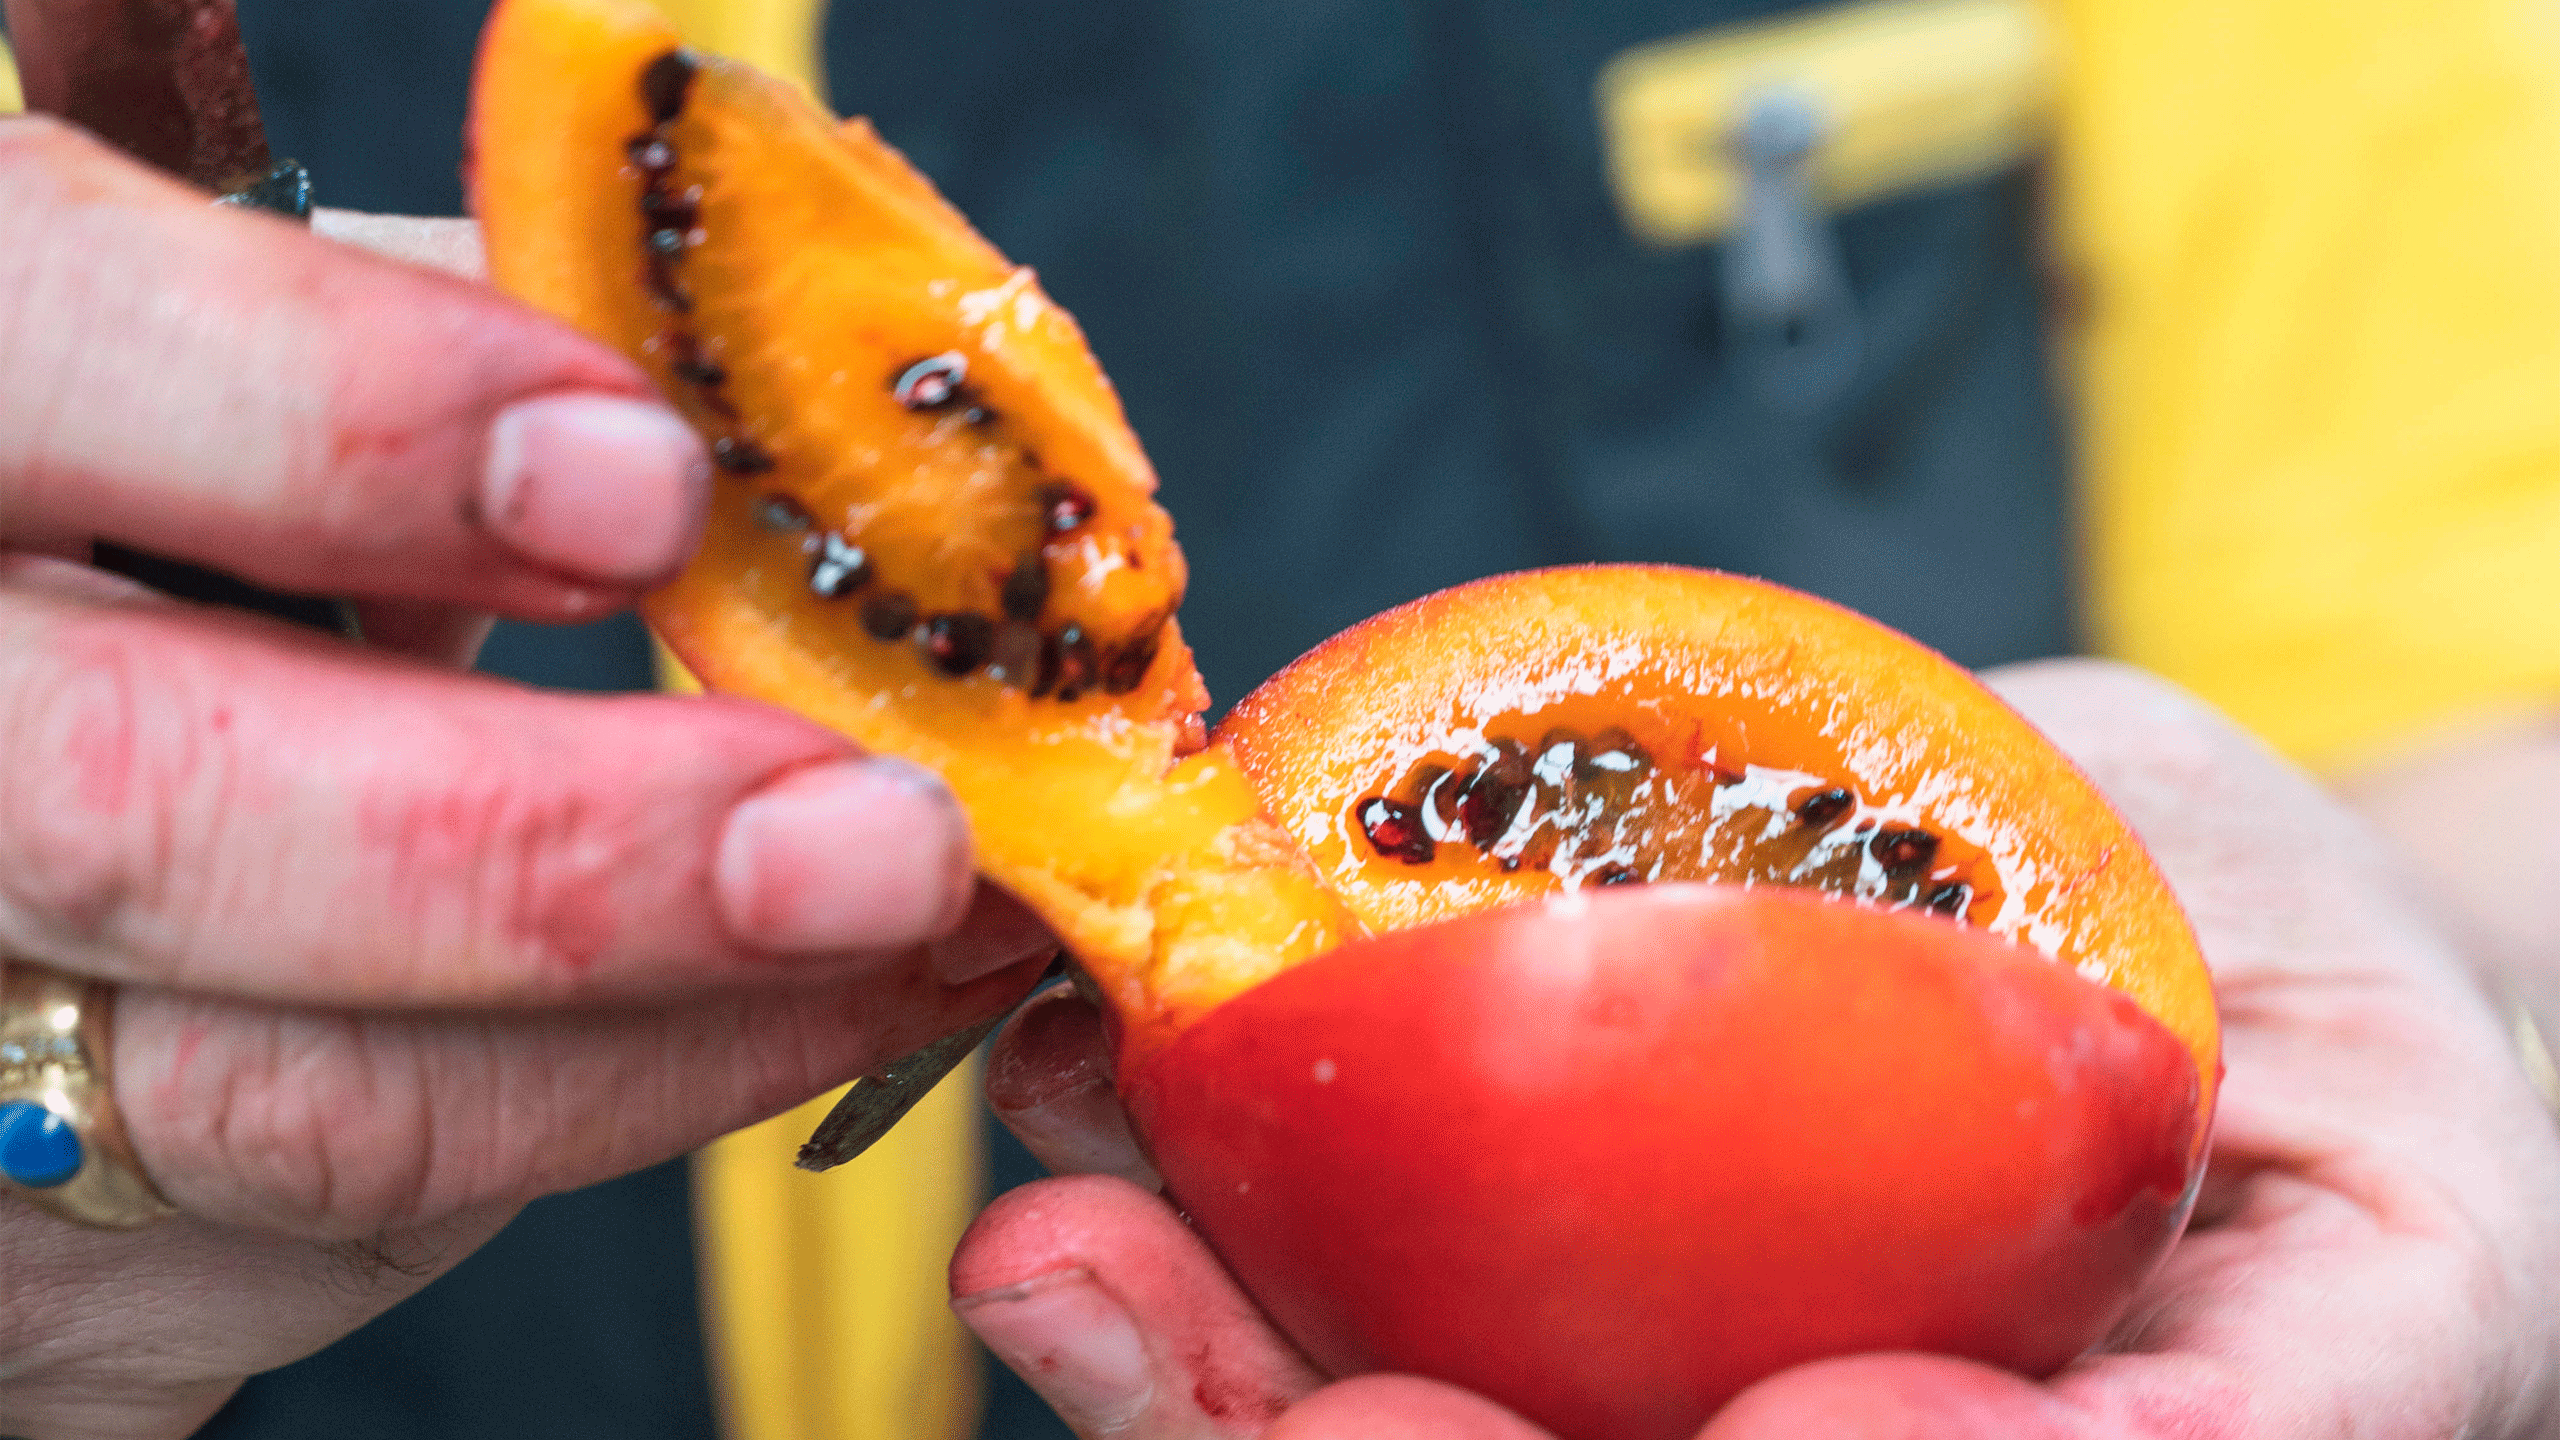 Beyond Colombia Tours | Tour: Tour de Frutas Exóticas en el Mercado de Paloquemao